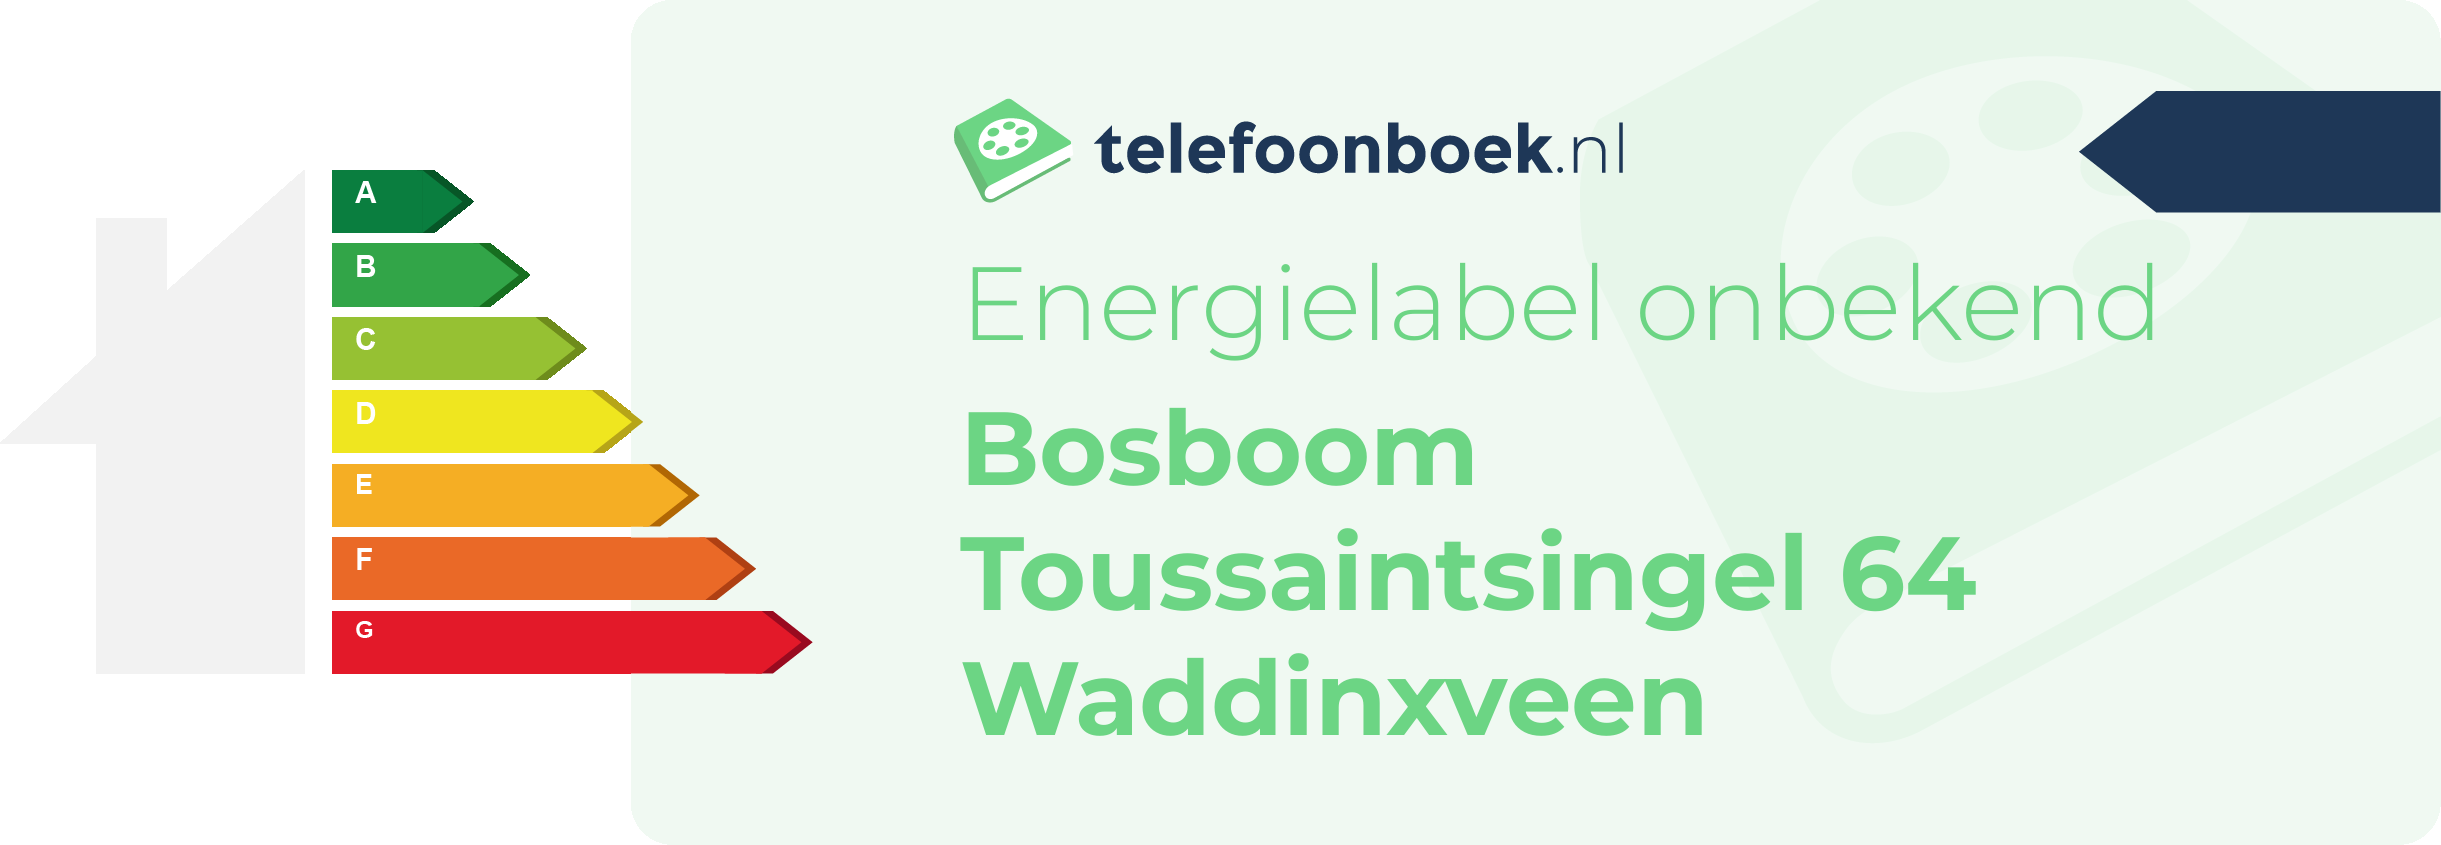 Energielabel Bosboom Toussaintsingel 64 Waddinxveen